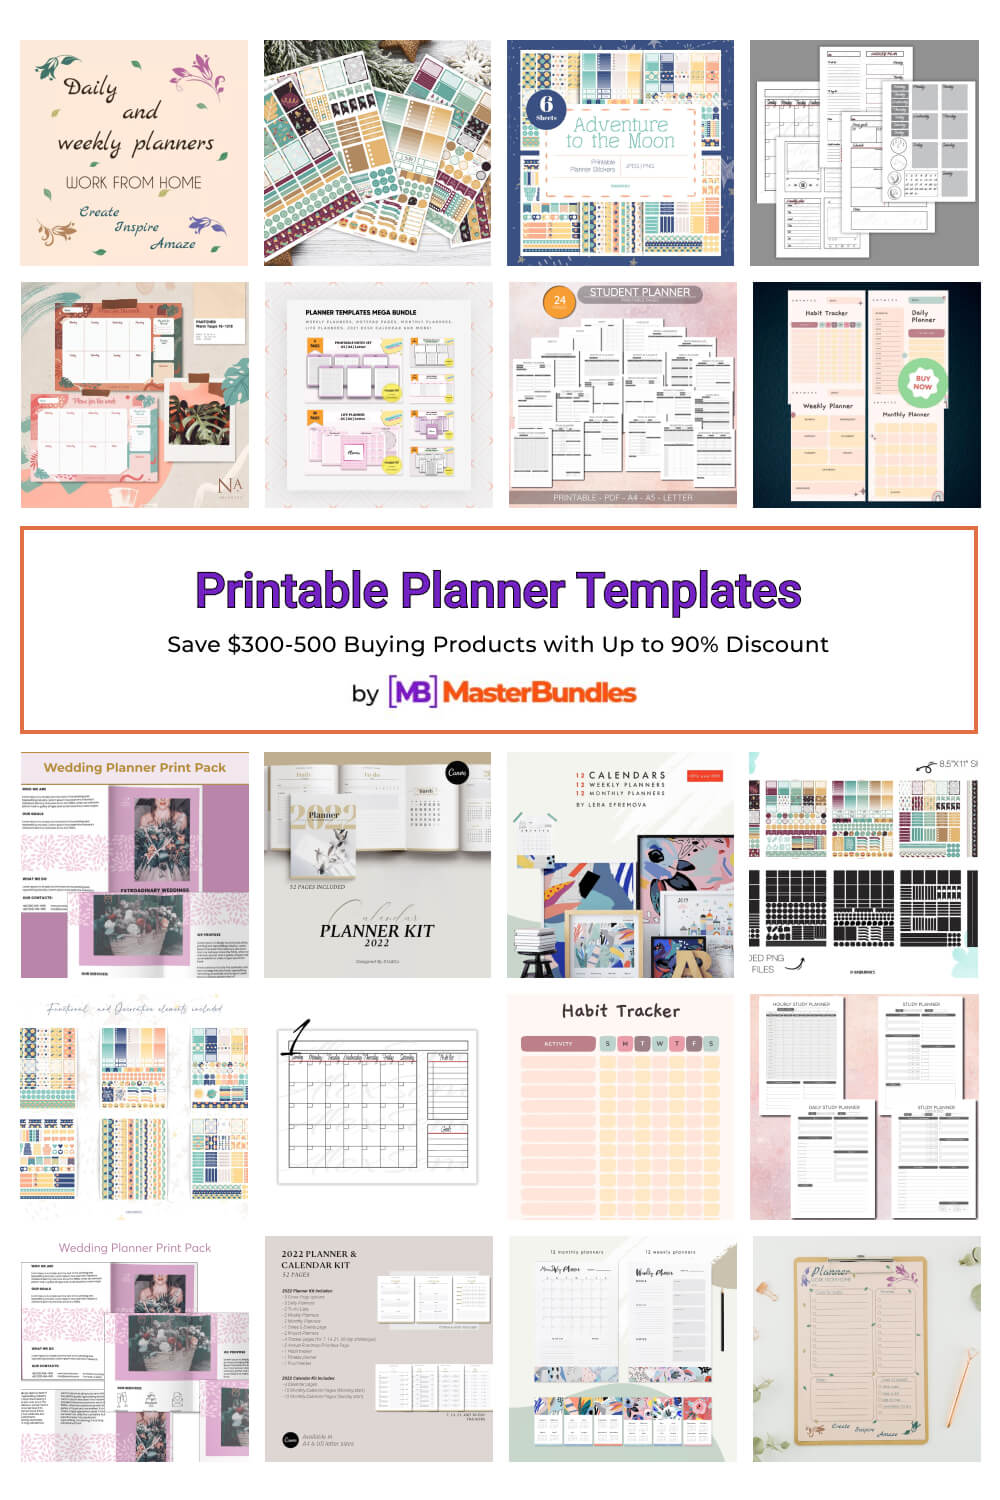 printable planner templates pinterest image.